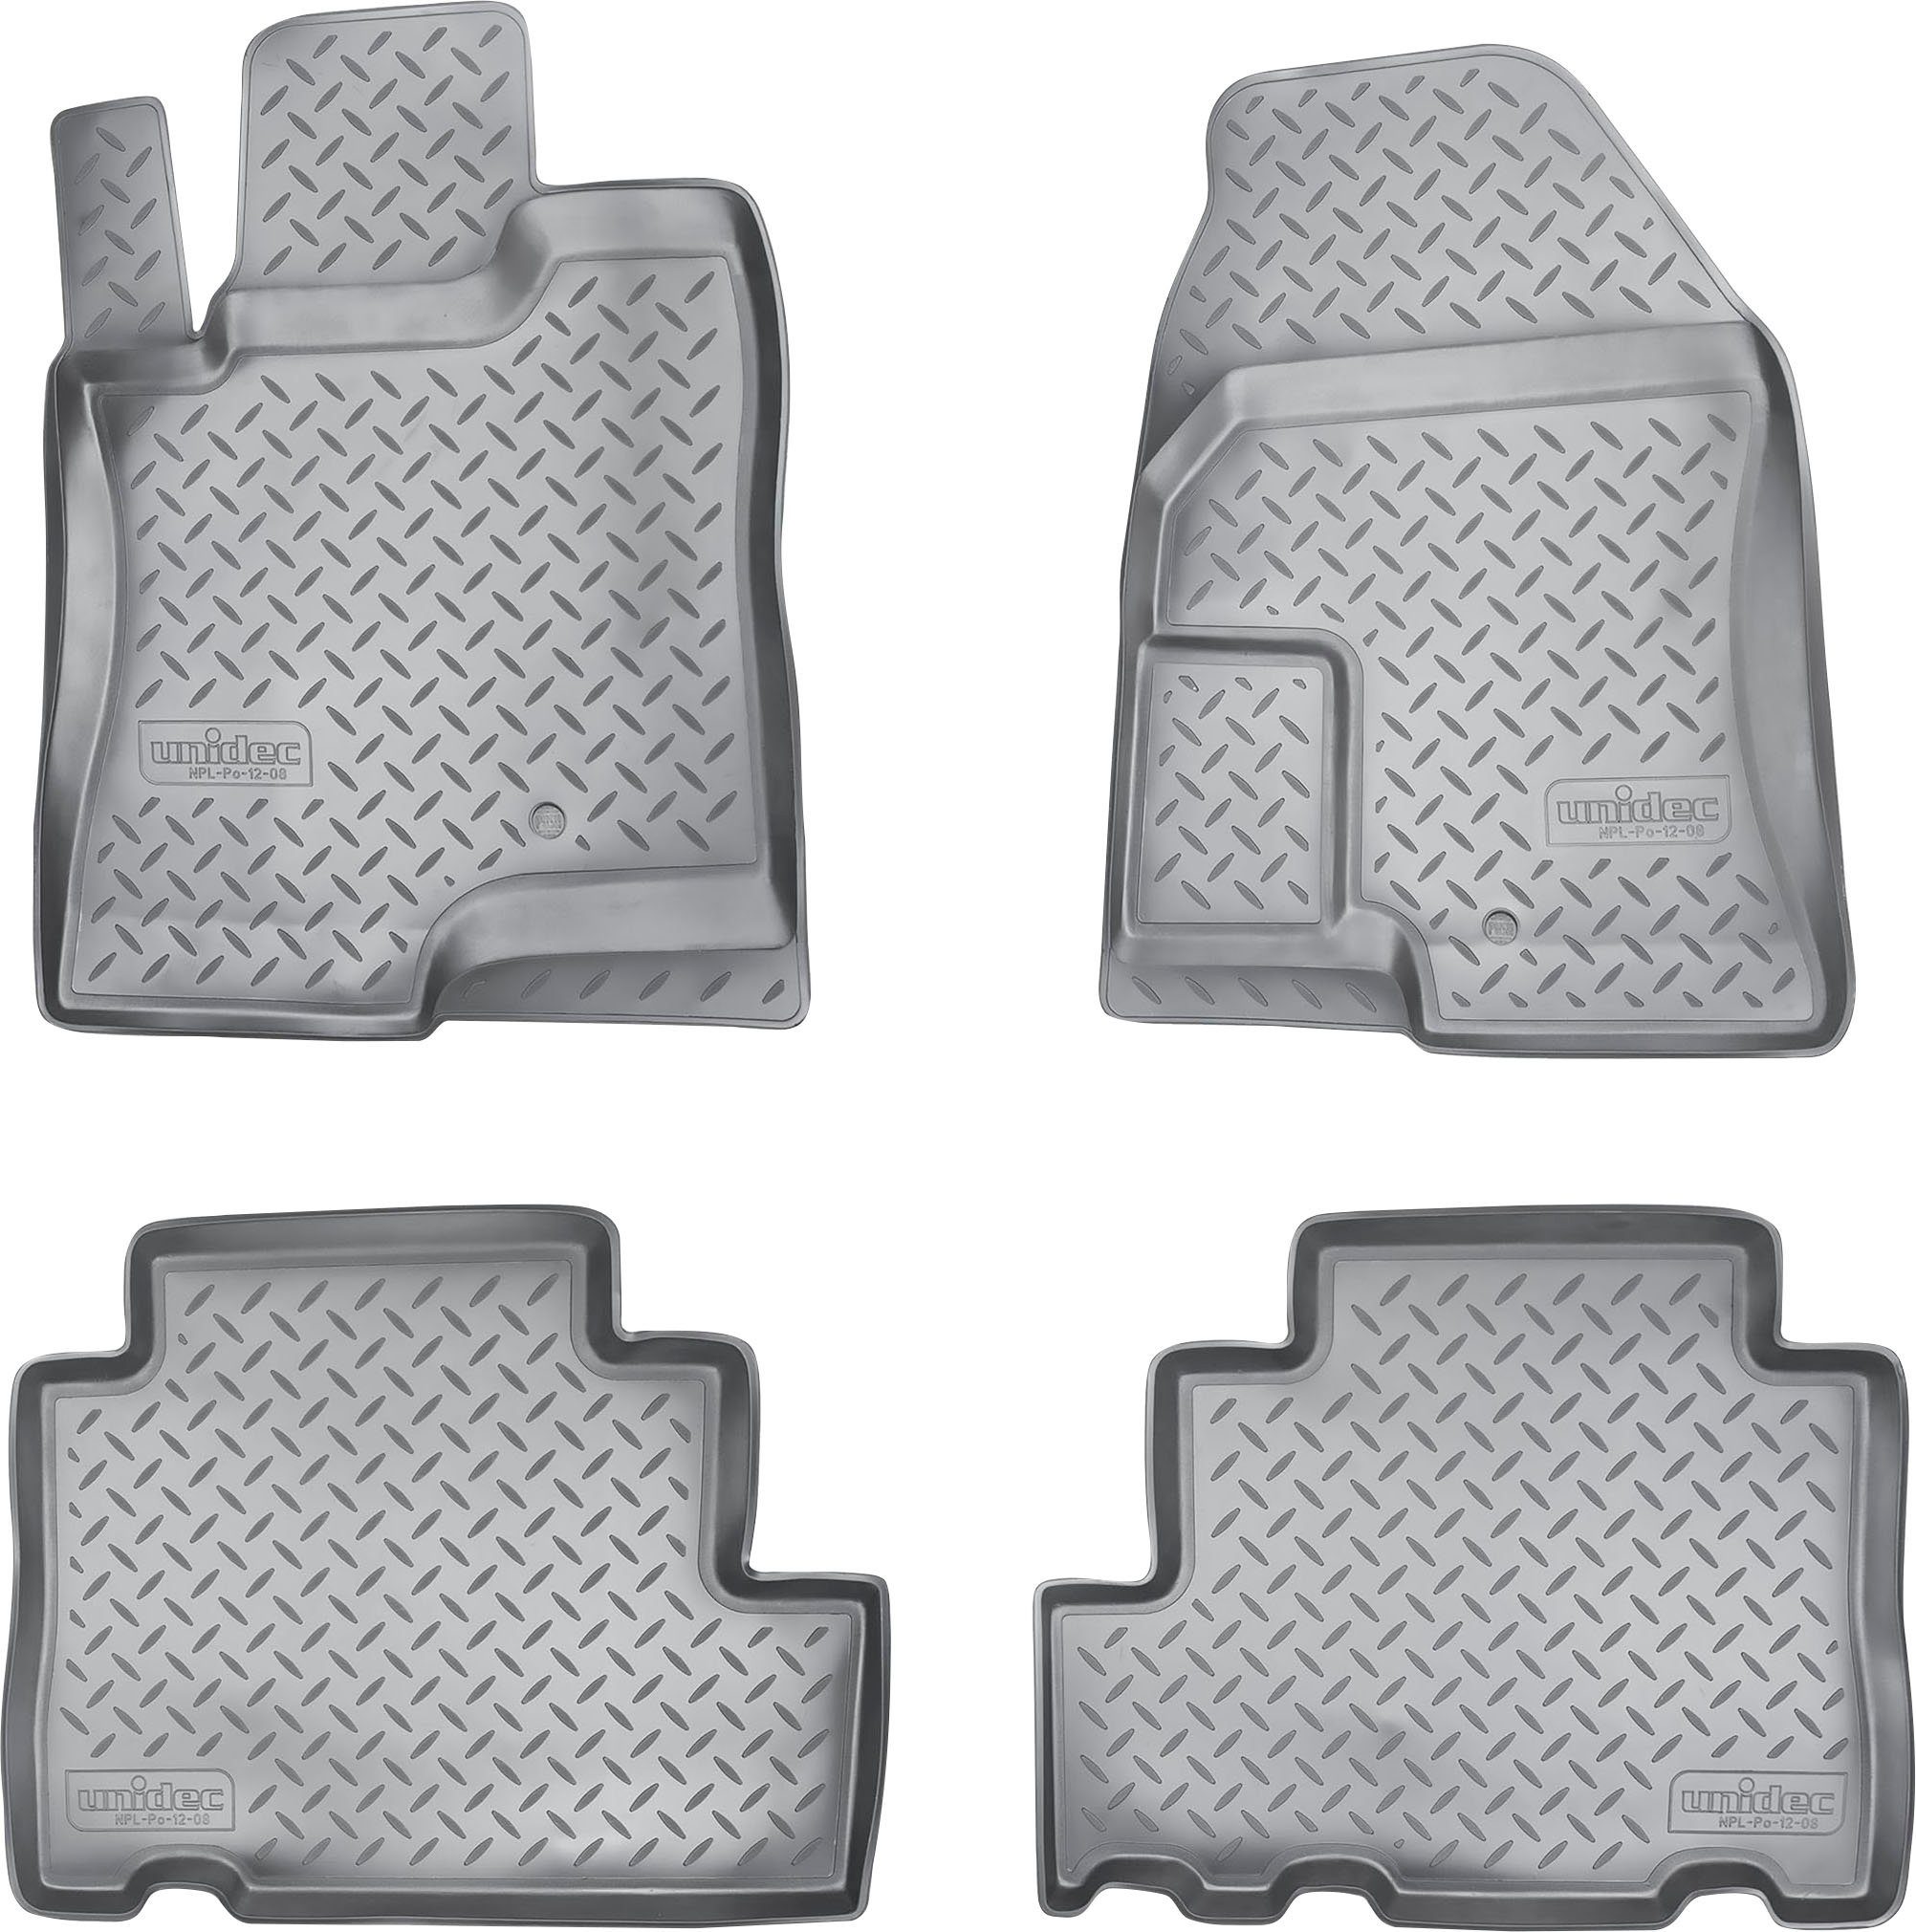 RECAMBO Passform-Fußmatten CustomComforts (4 St), OPEL Antara Chevrolet ab Captiva, für 2006, perfekte Passform